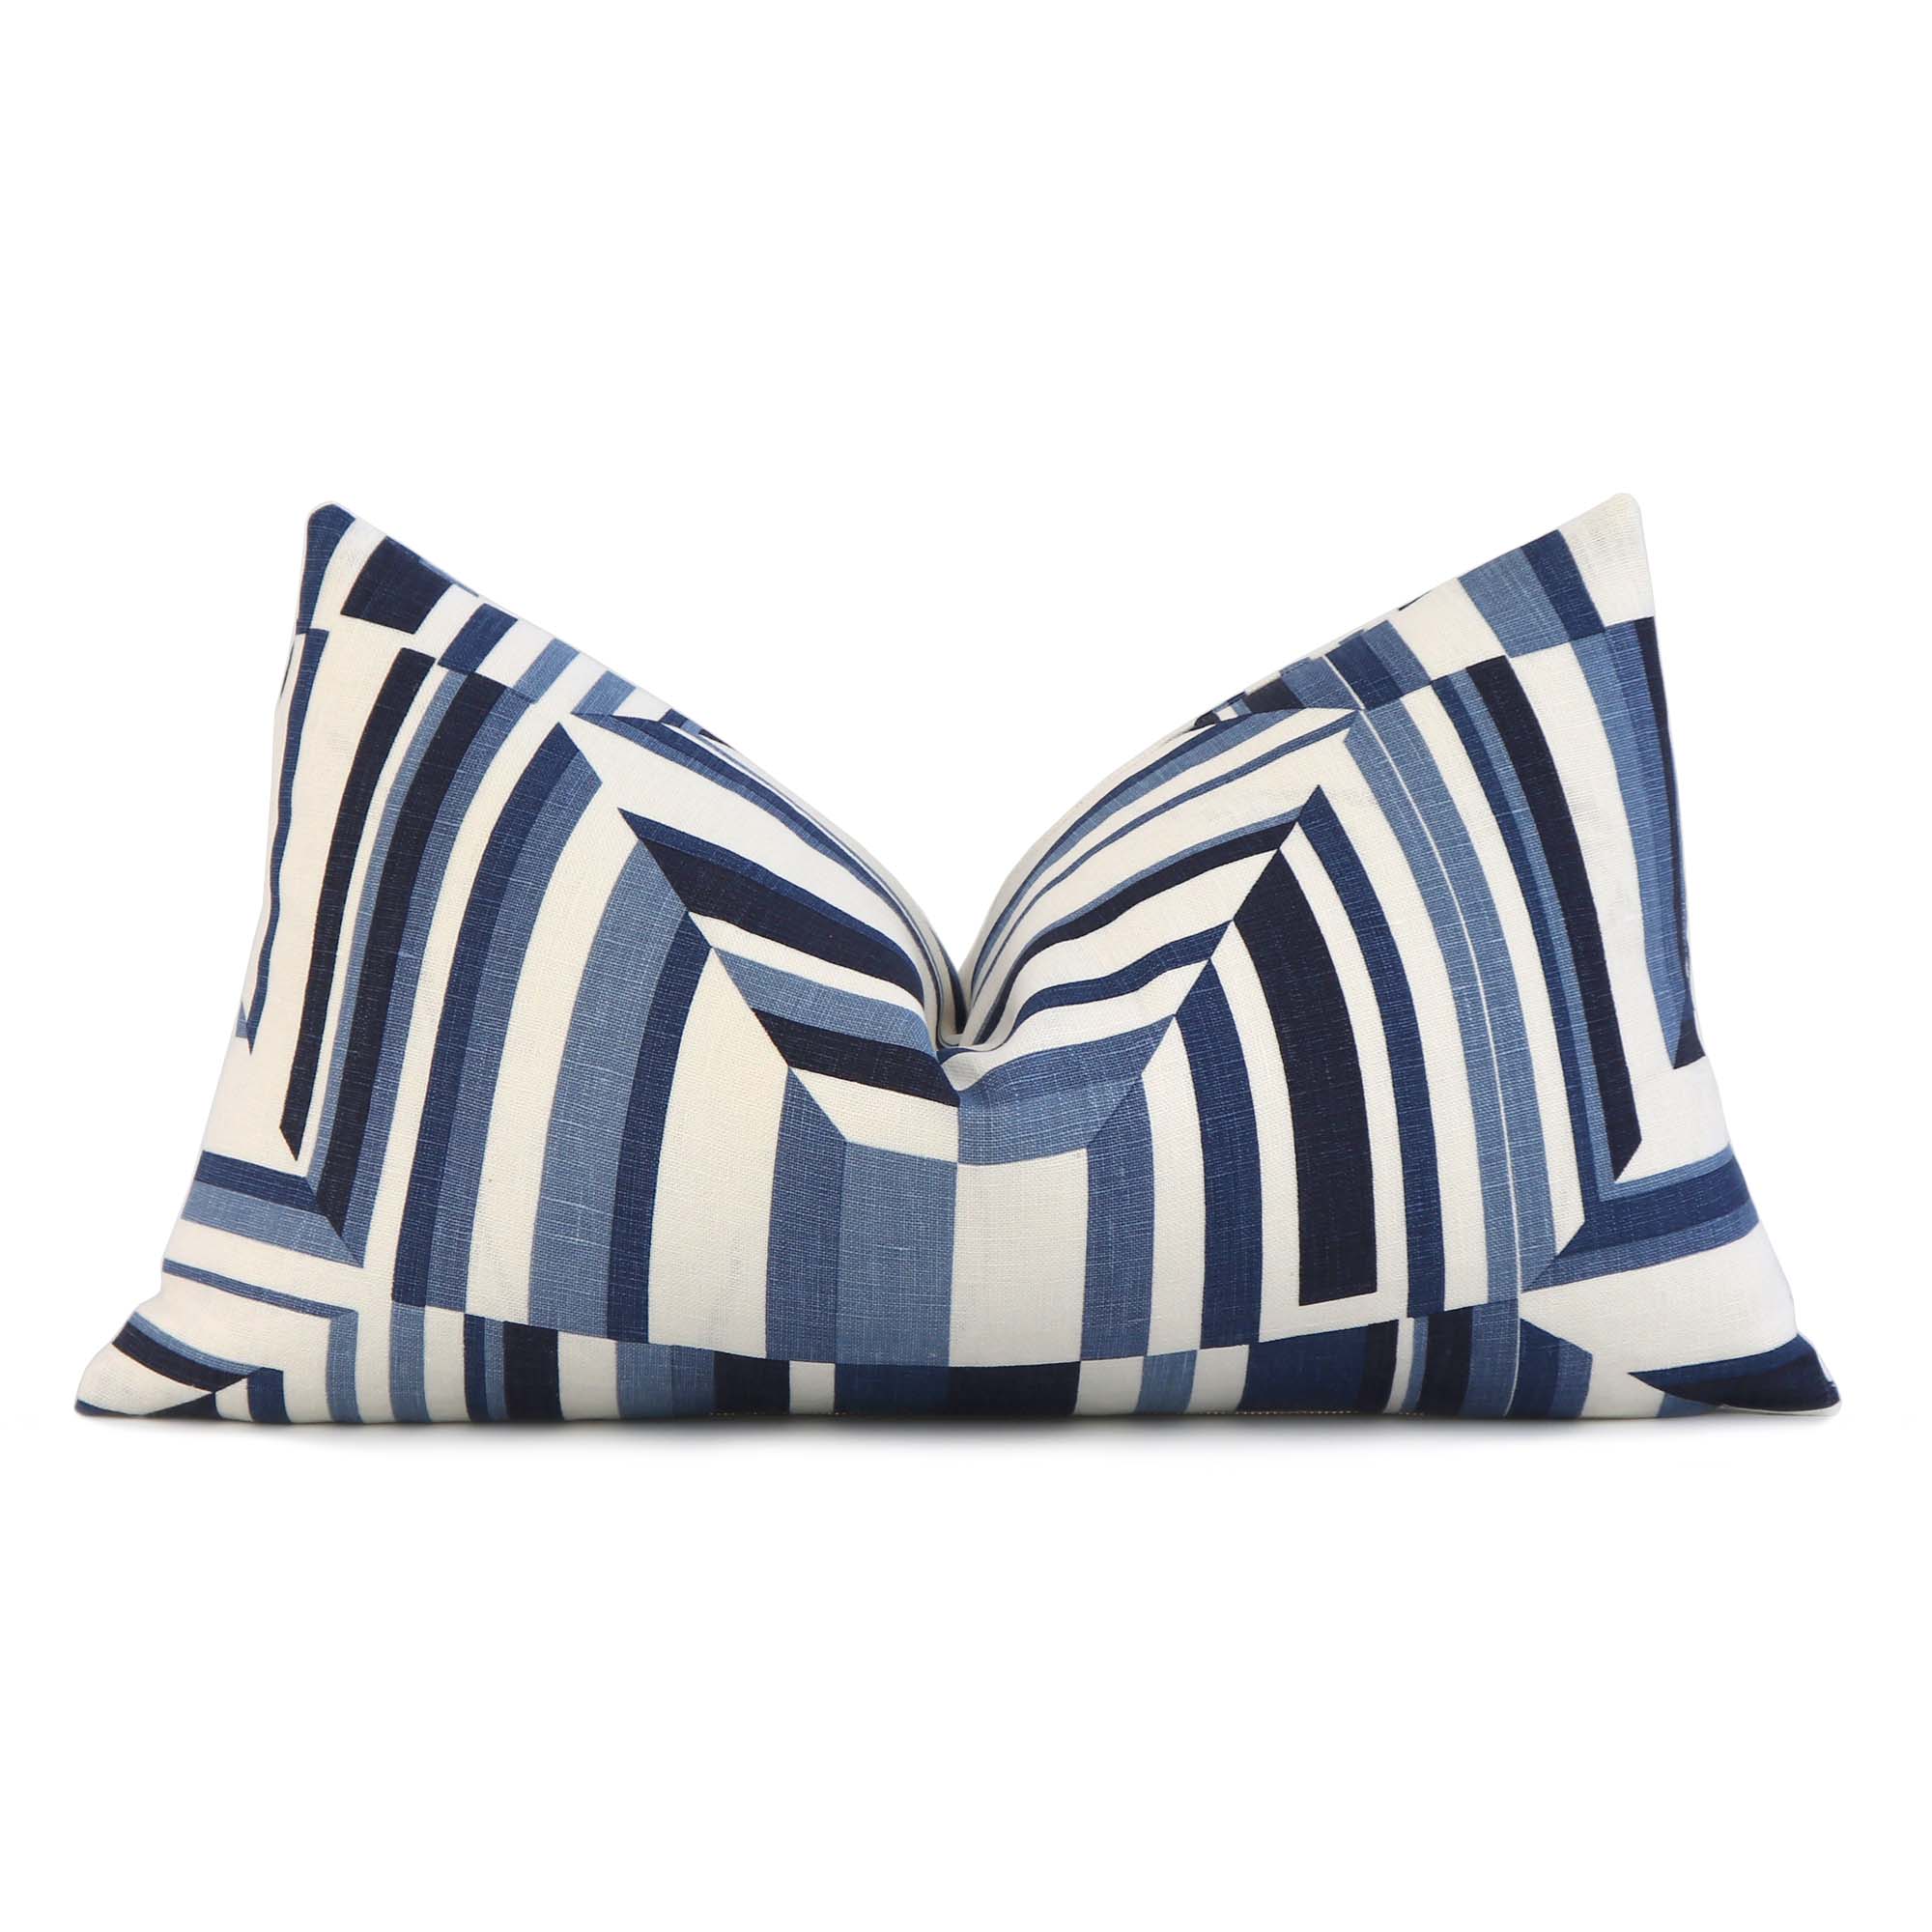 Thibaut Cubism Geometric Blue and White Stripes Linen Designer Luxury Decorative Lumbar Throw Pillow Cover